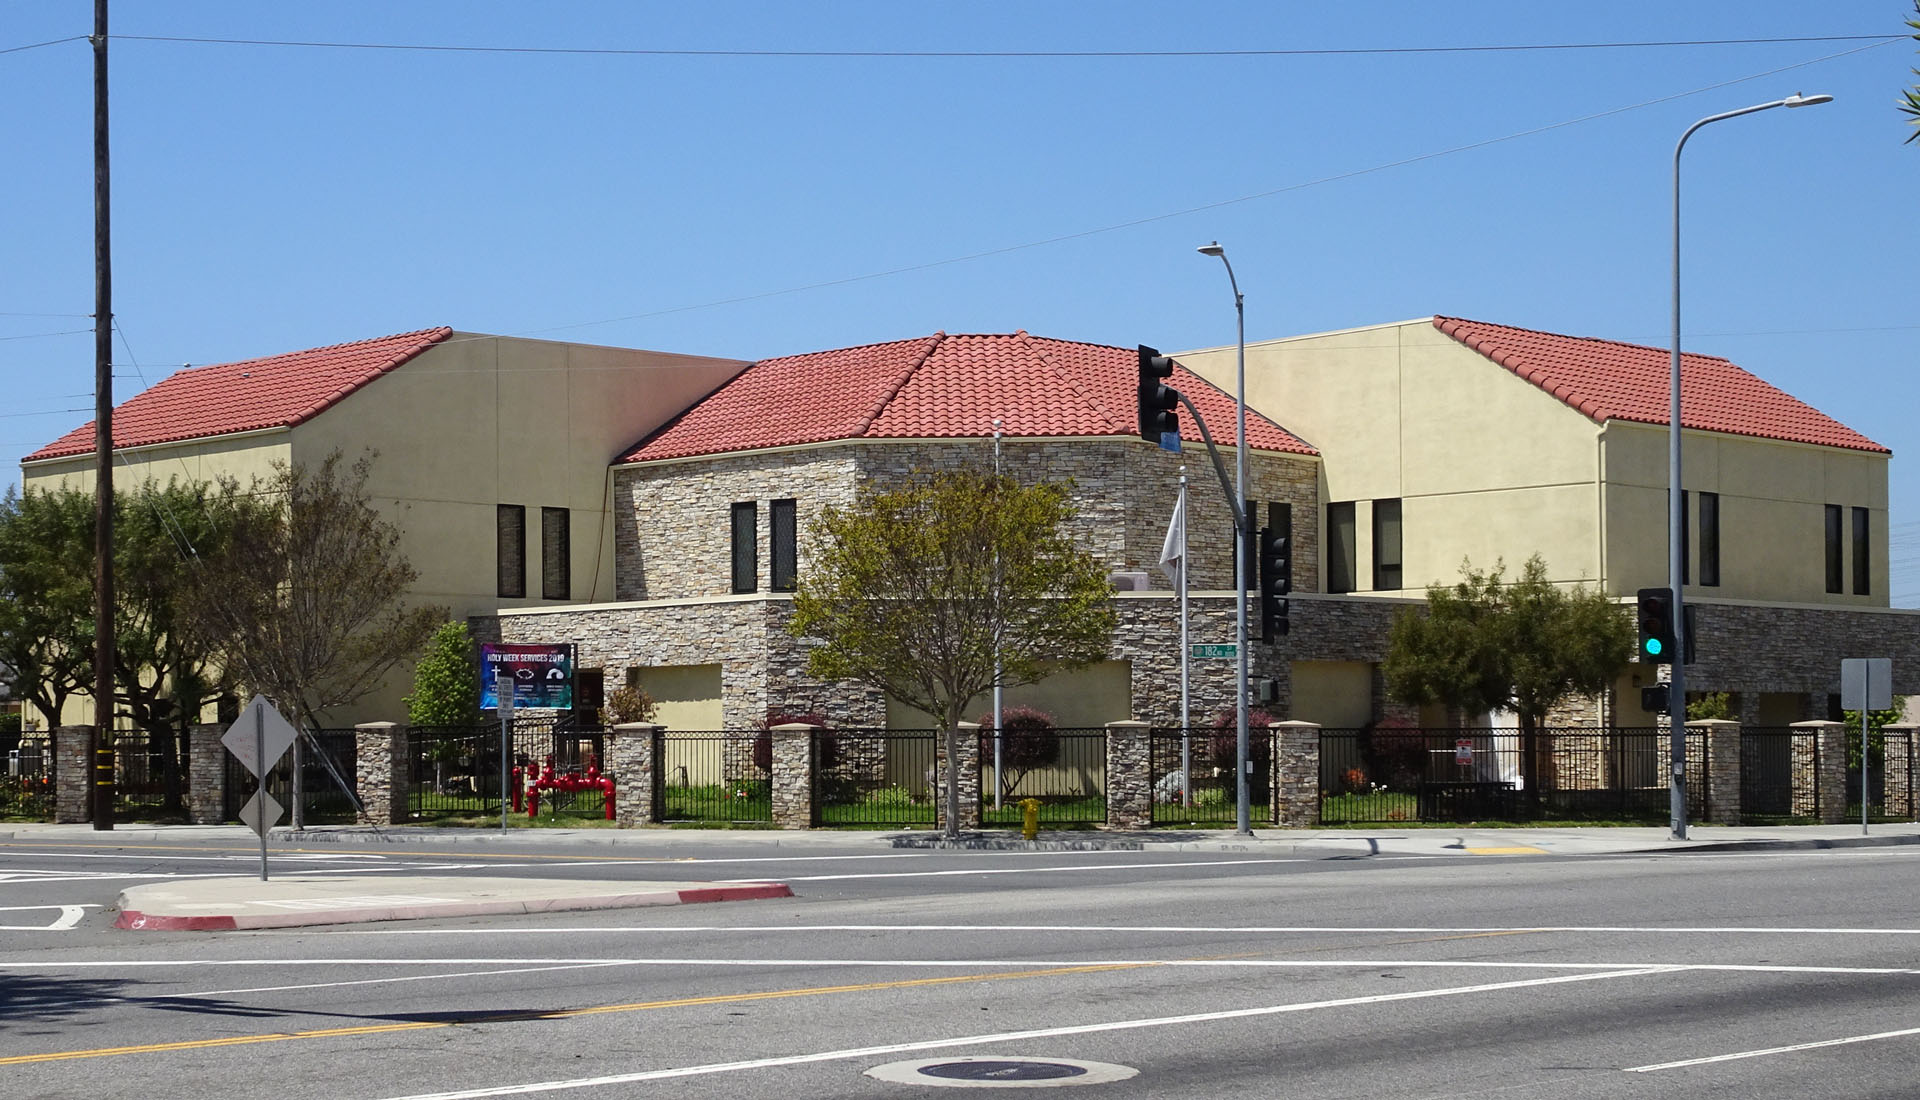 Pentecostal Missionary Church of Christ South Bay